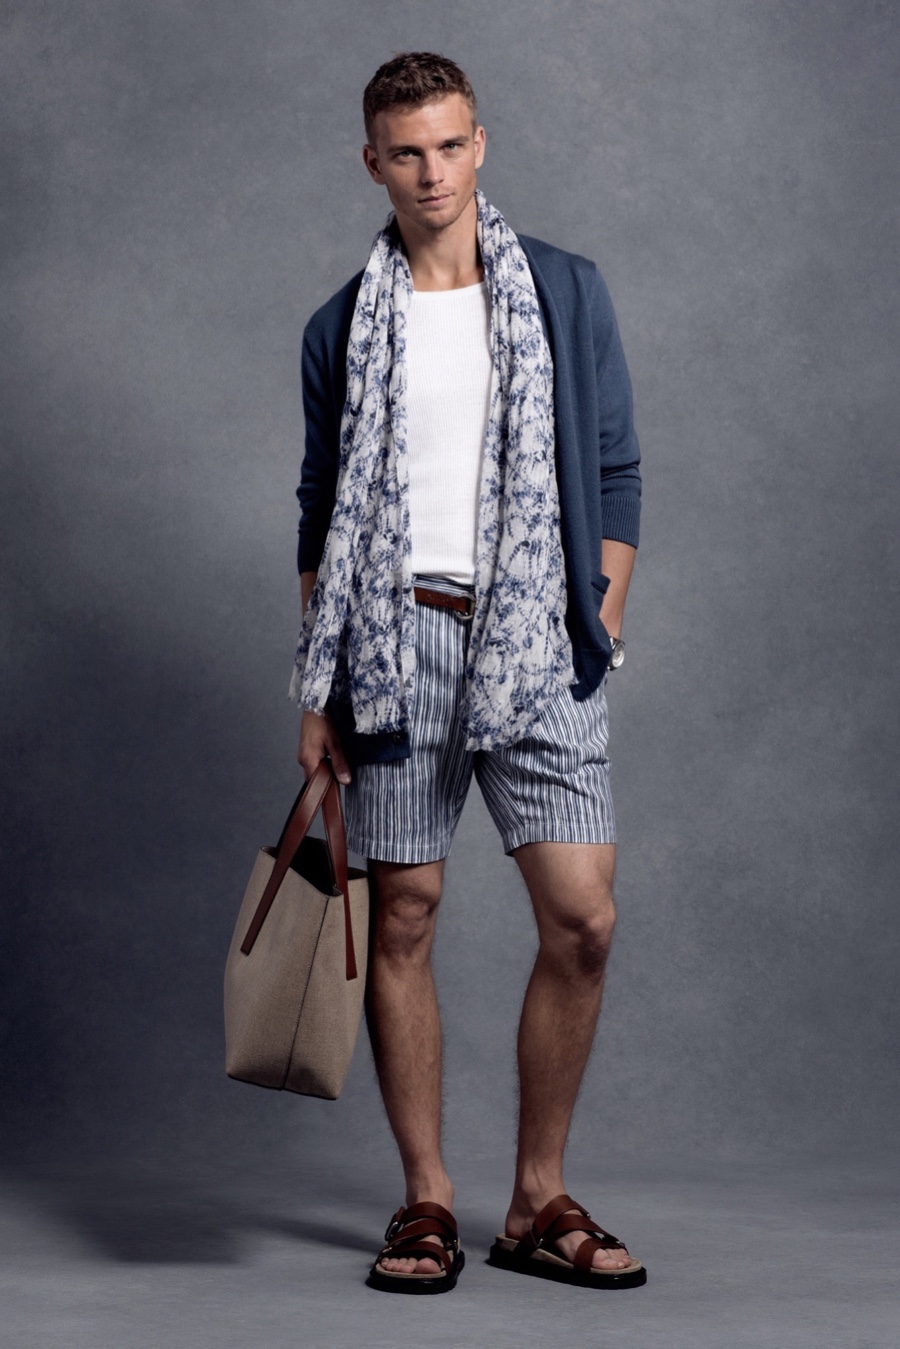 Michael Kors Spring/Summer 2016 Collection | New York Fashion Week: Men